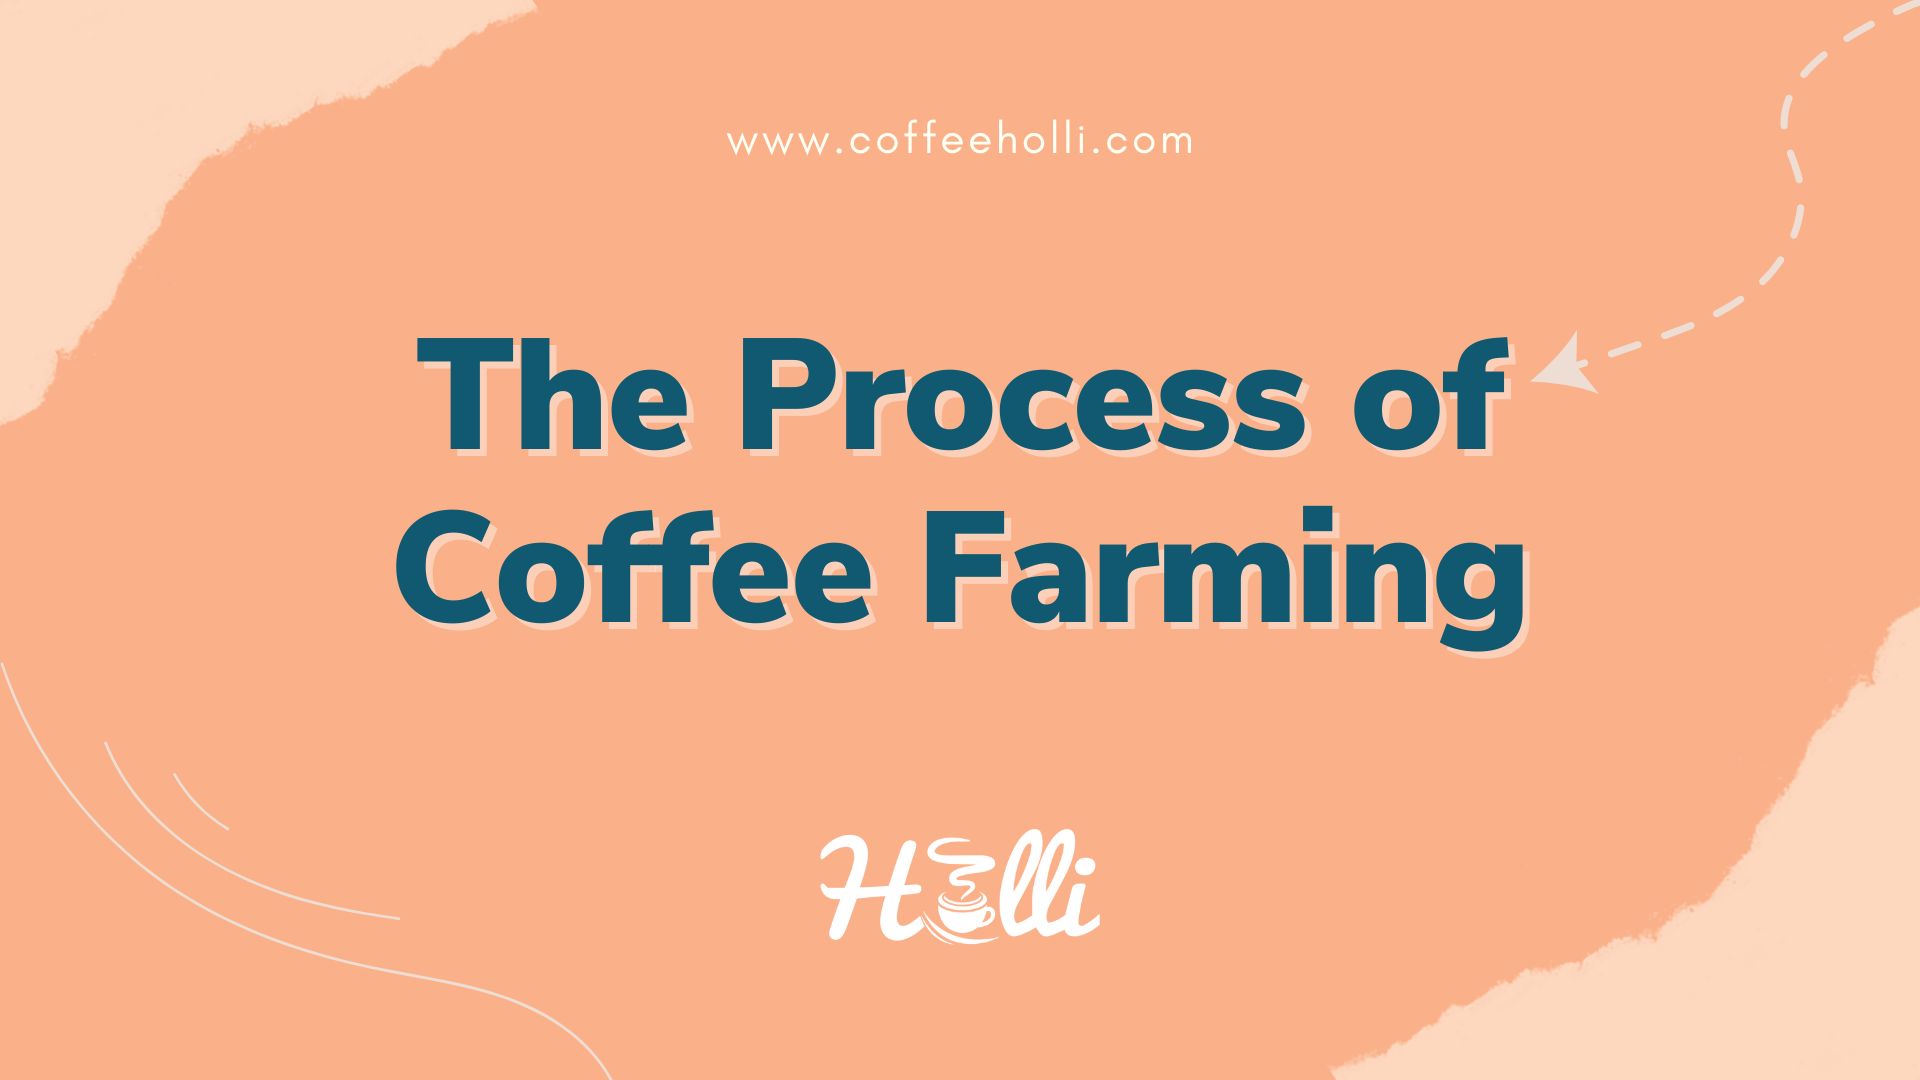 The Process of Coffee Farming